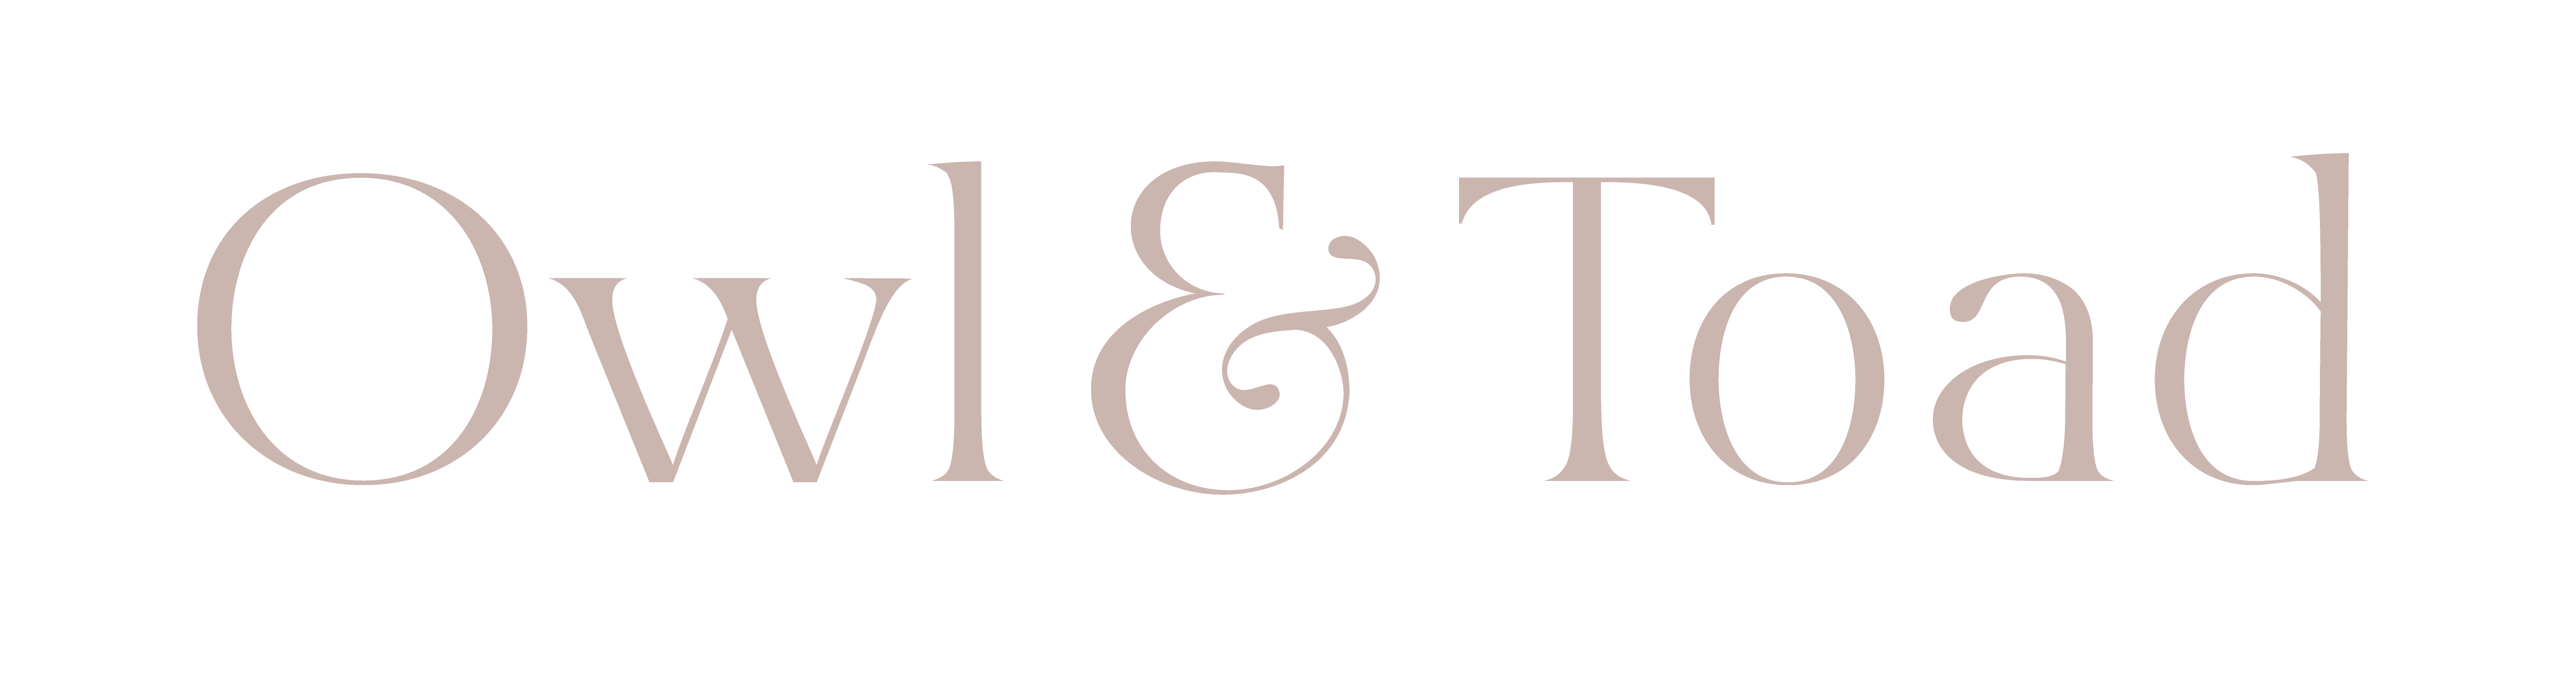 Owl & Toad logo